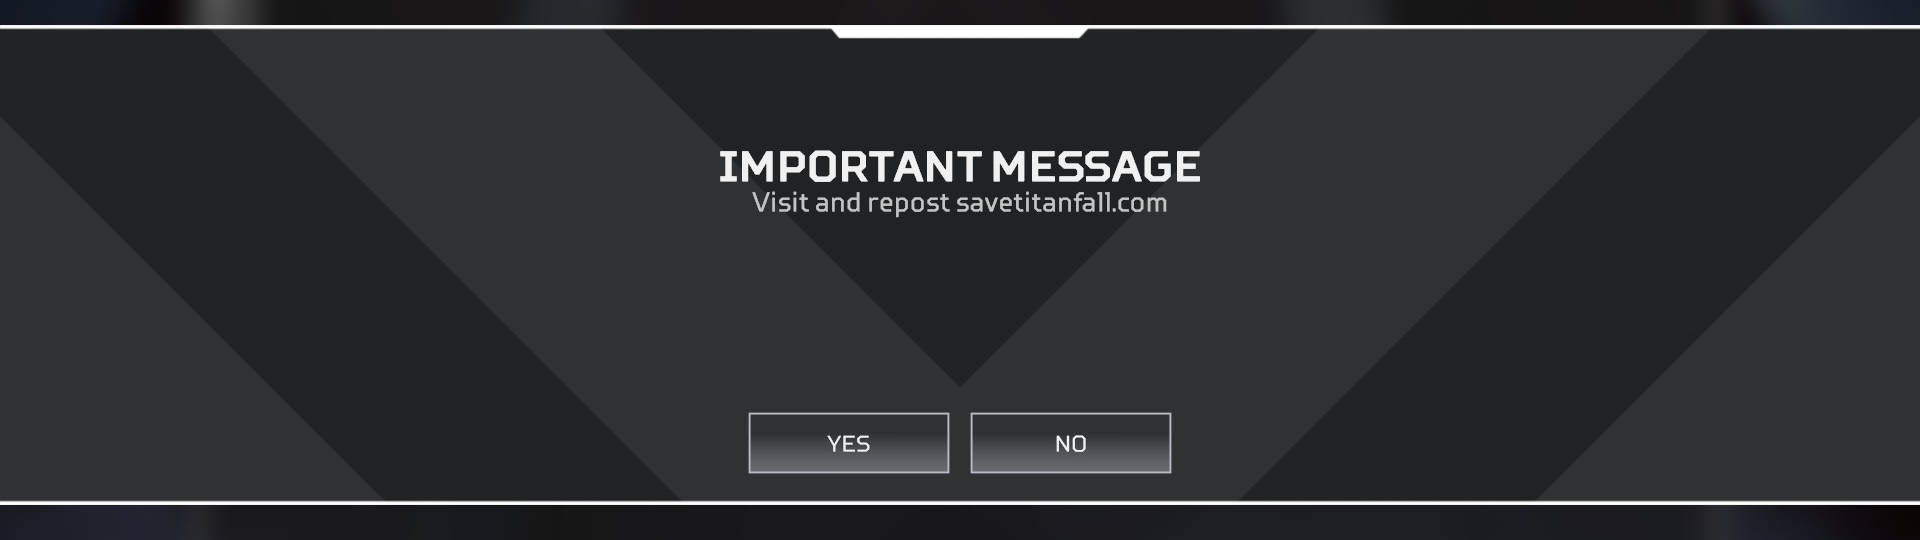 Apex Legends Hacked Saved Titanfall Message slice